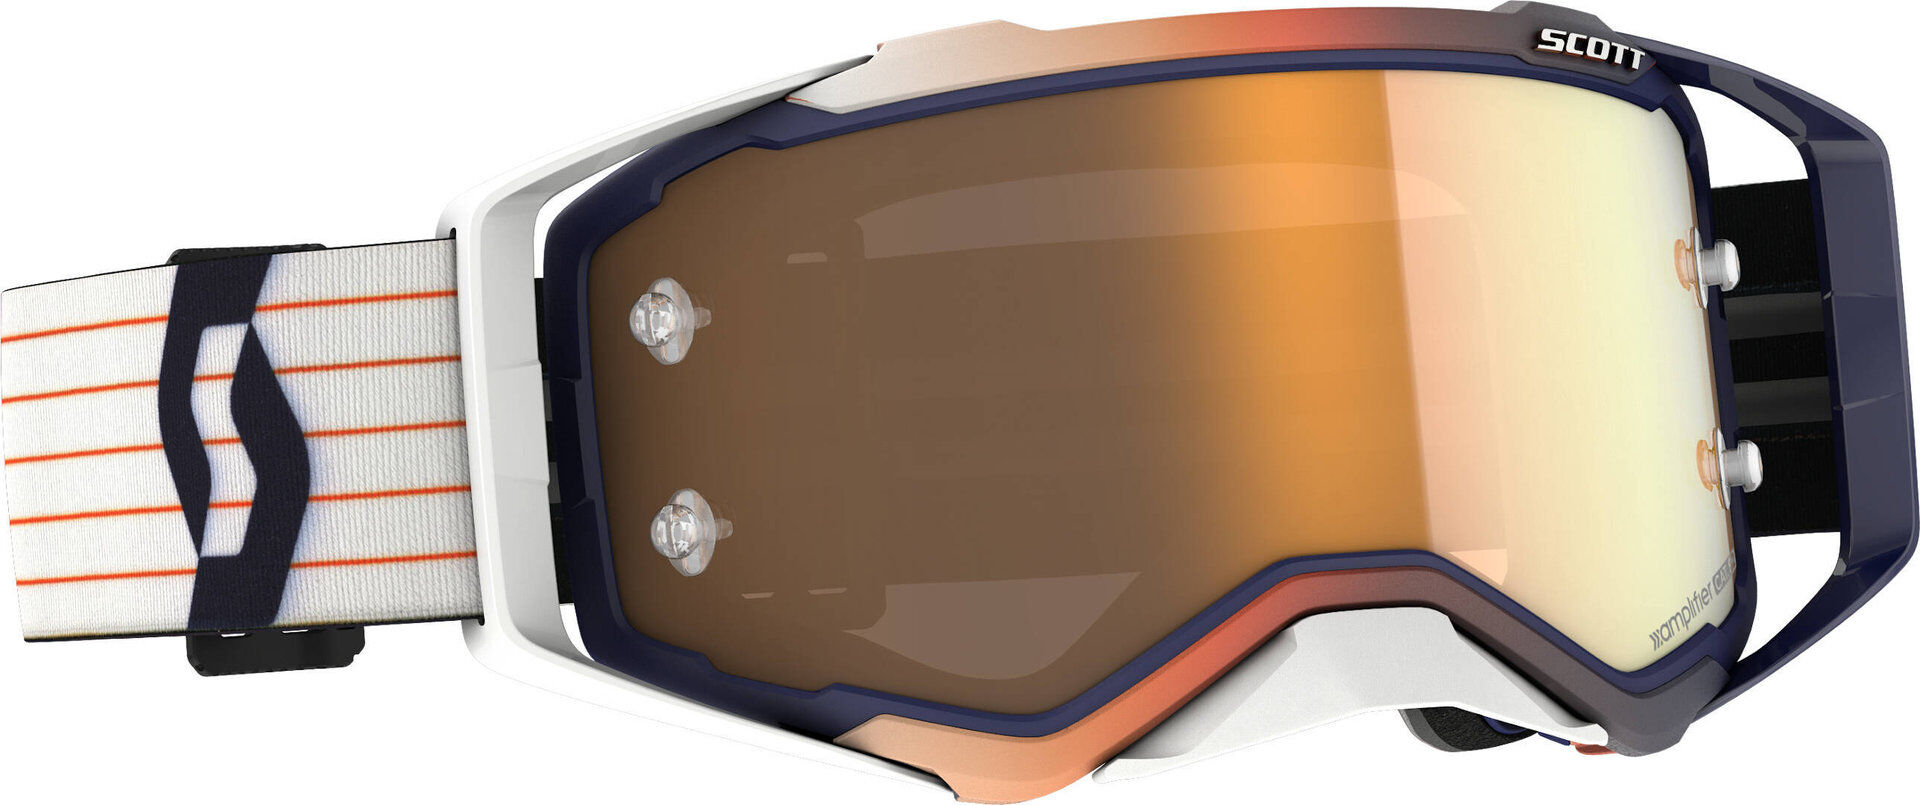 Scott Prospect Amplifier Gafas de Motocross naranja/blanco - Oro (un tamaño)